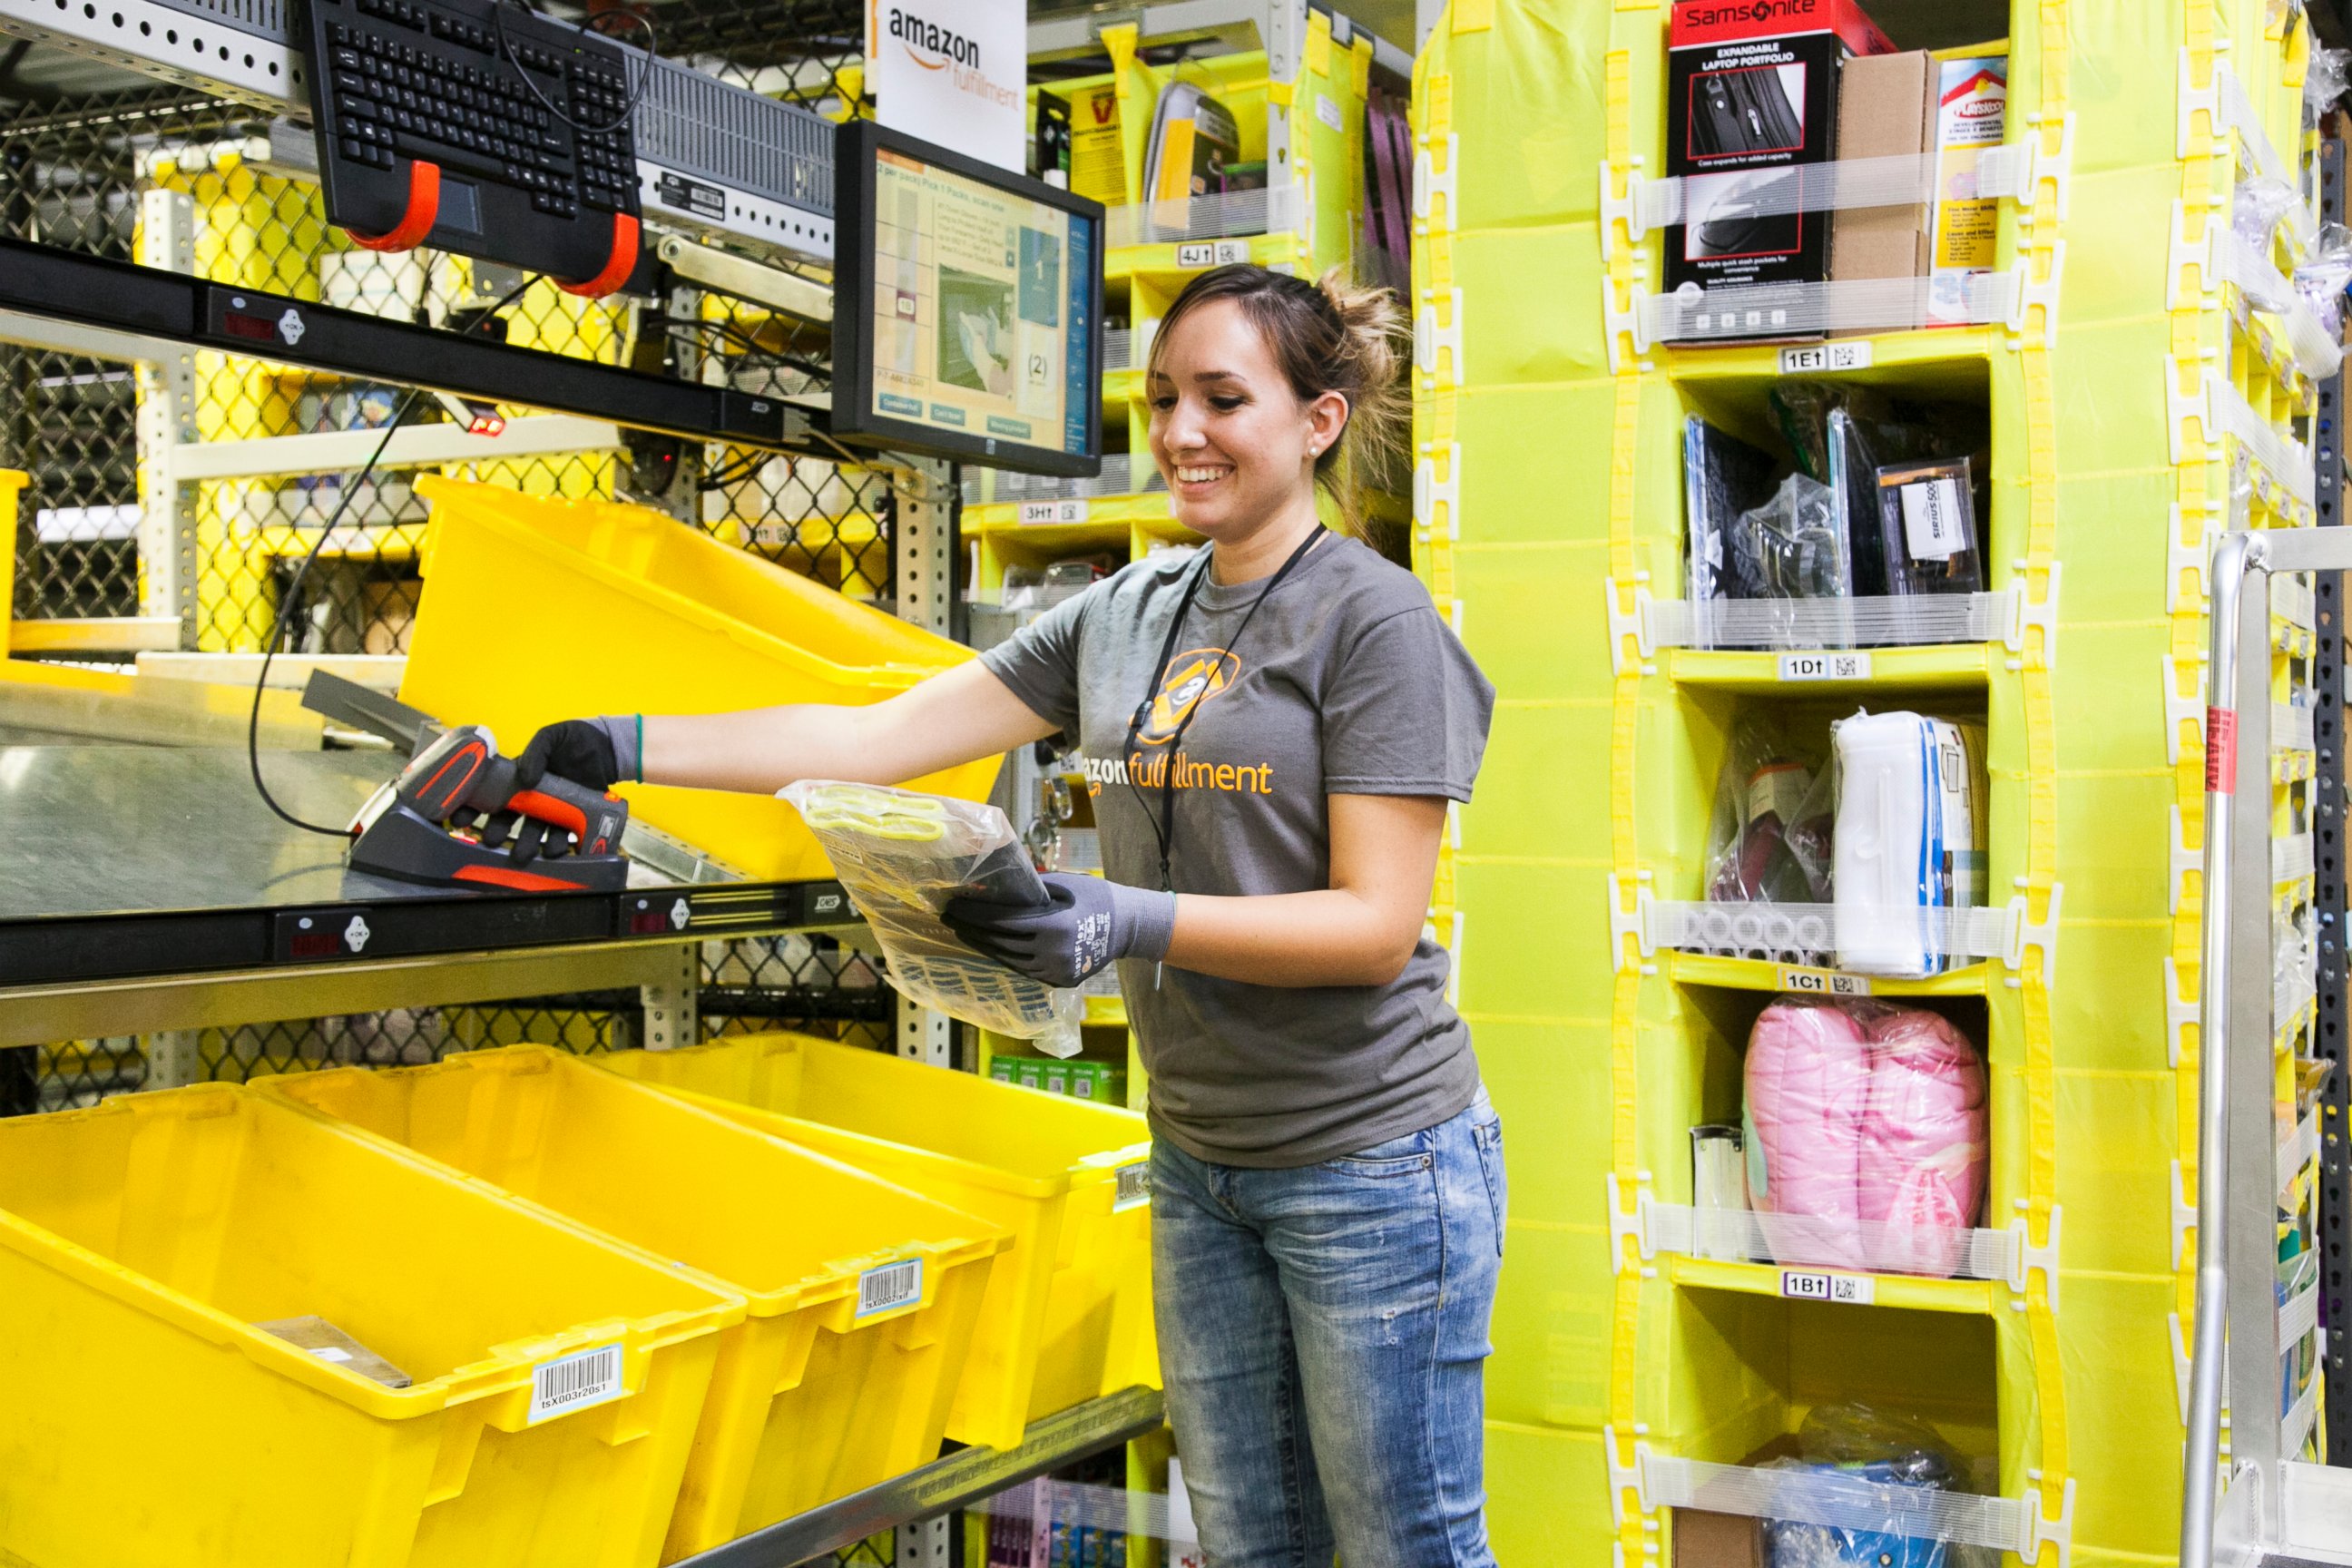 PHOTO: Amazon's Kiva robots are working to help expedite customer orders.